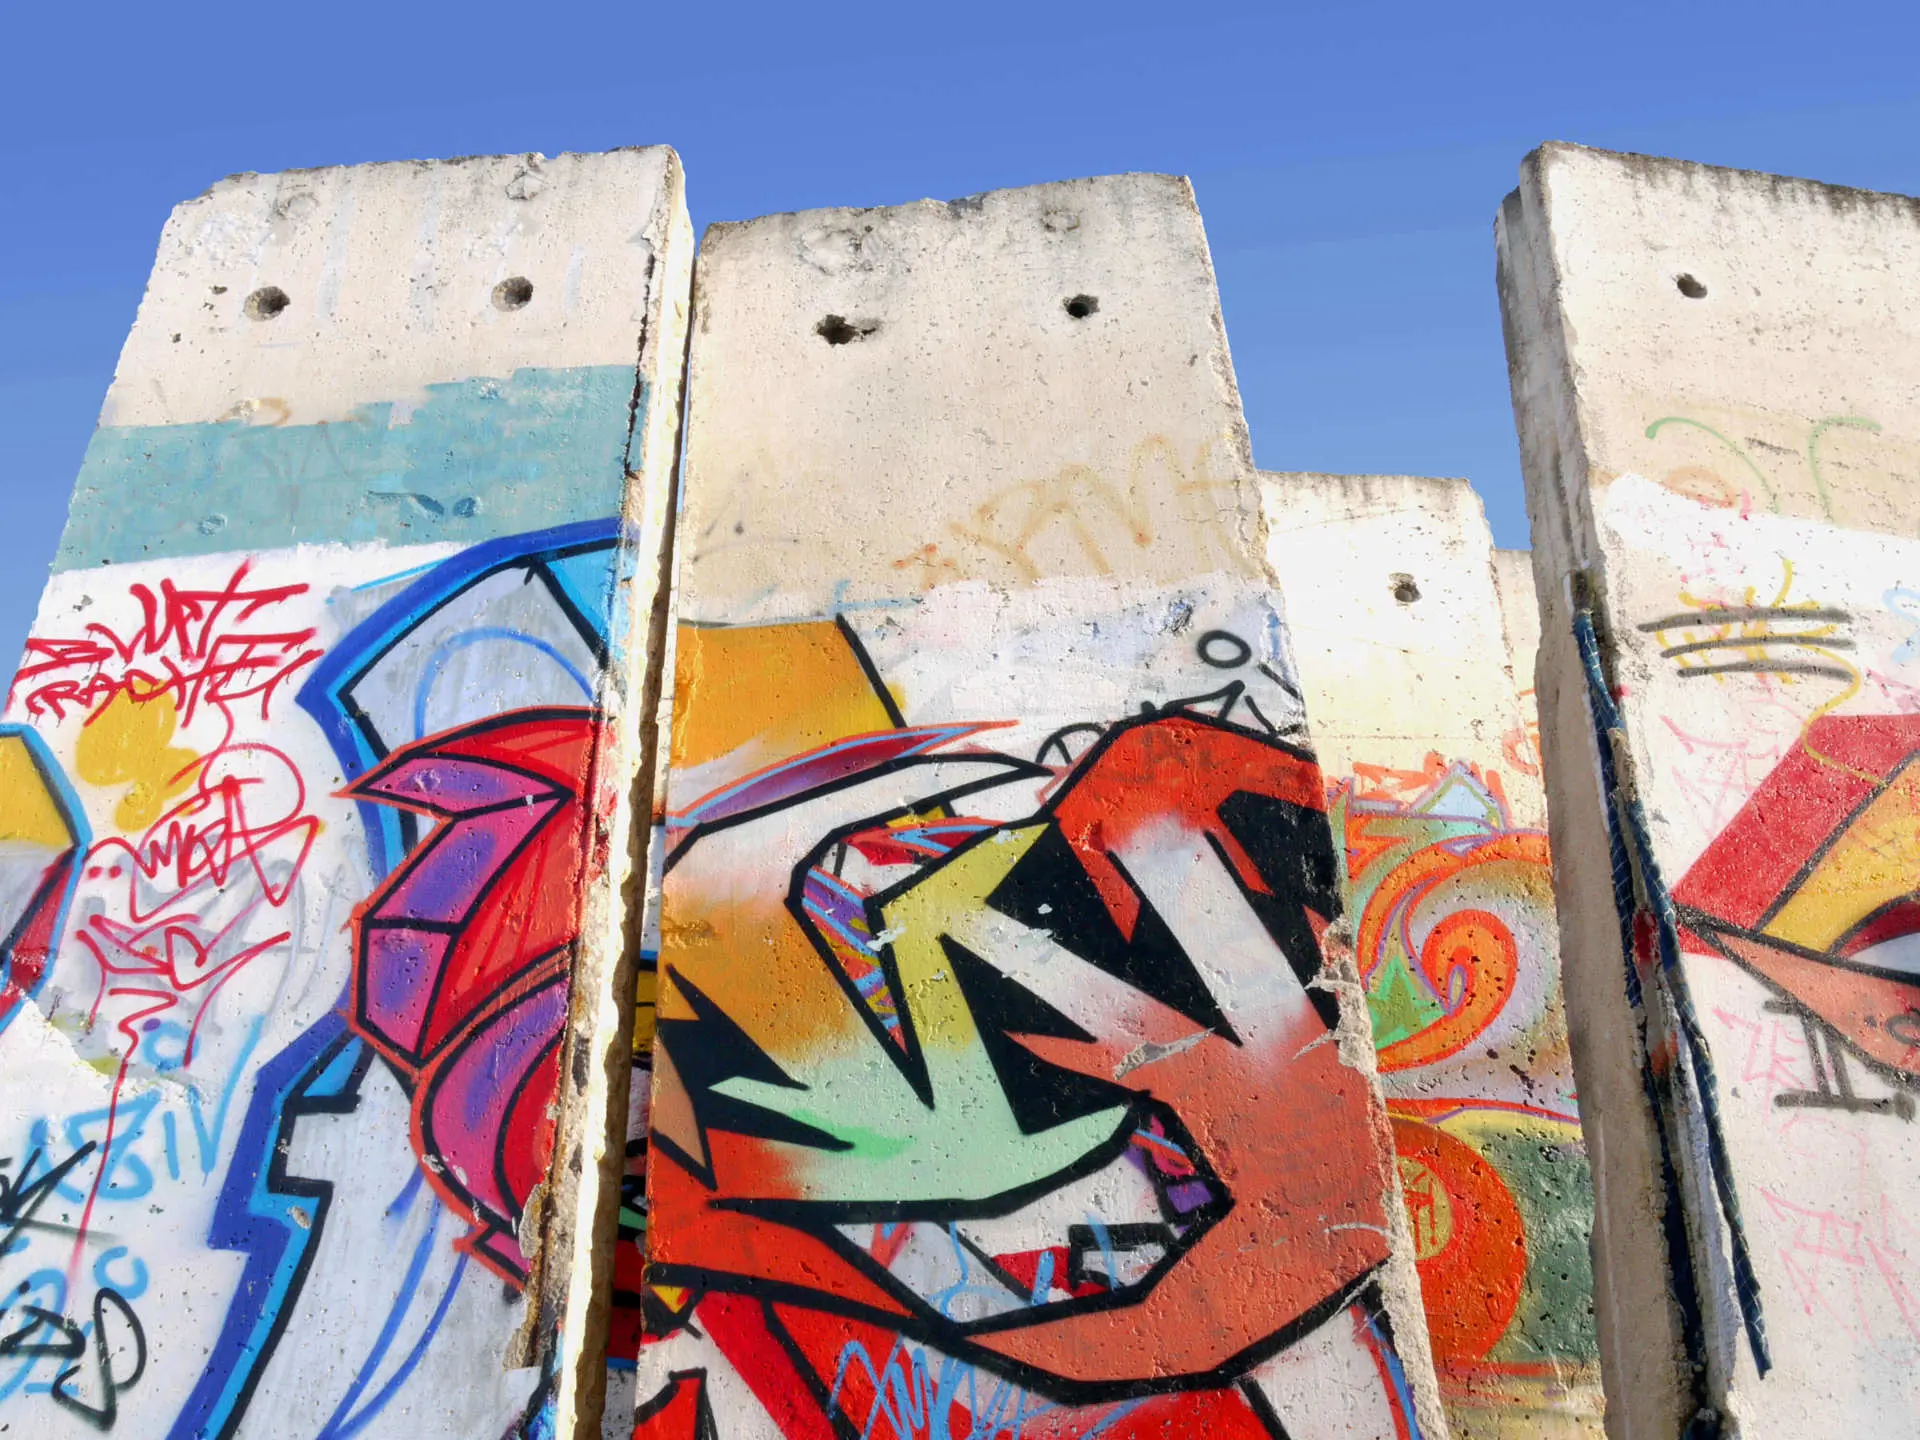 Berlin Street Art History Wall